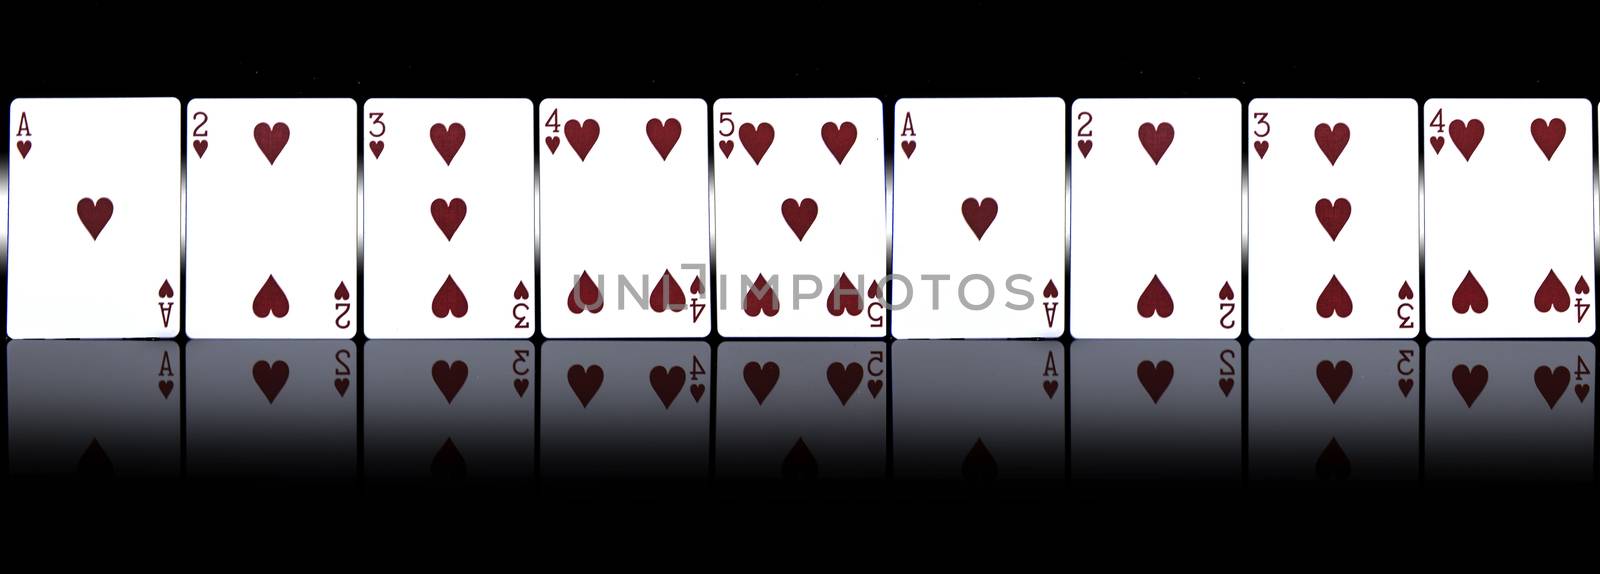 Poker casino playing cards